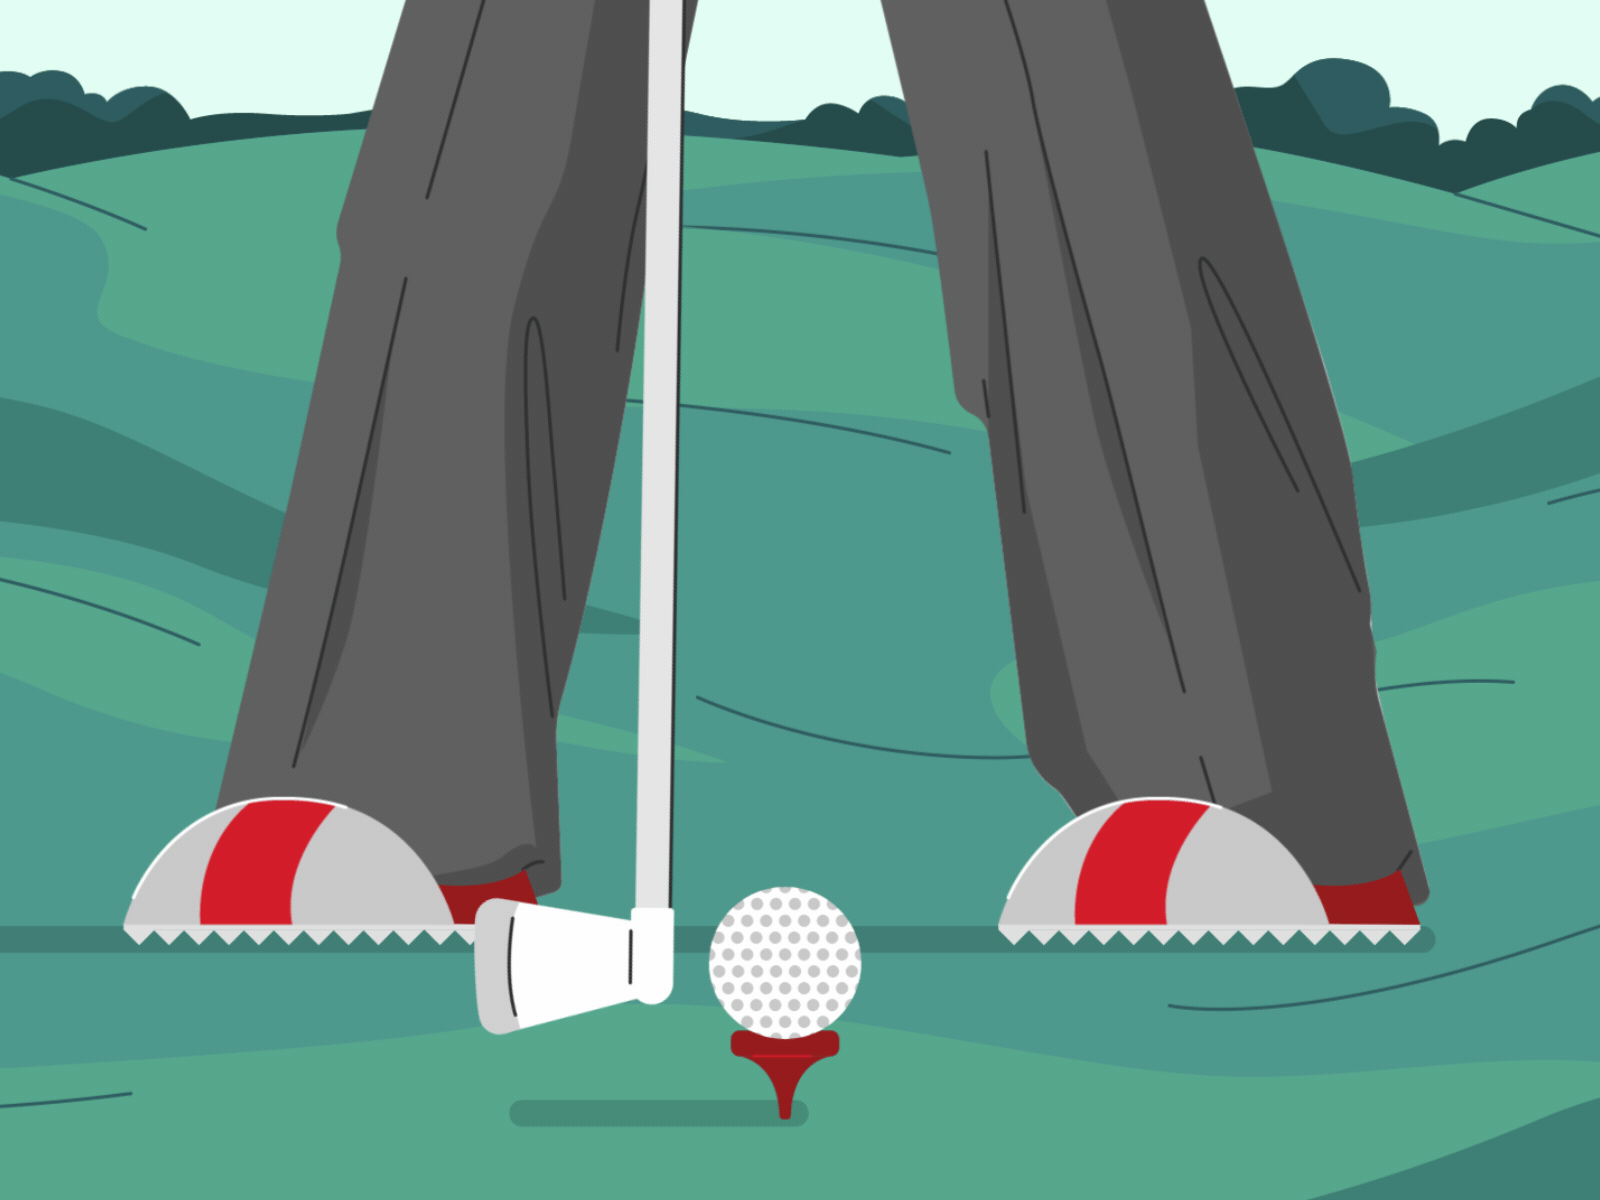 Golf by Lemons Animation Studio on Dribbble